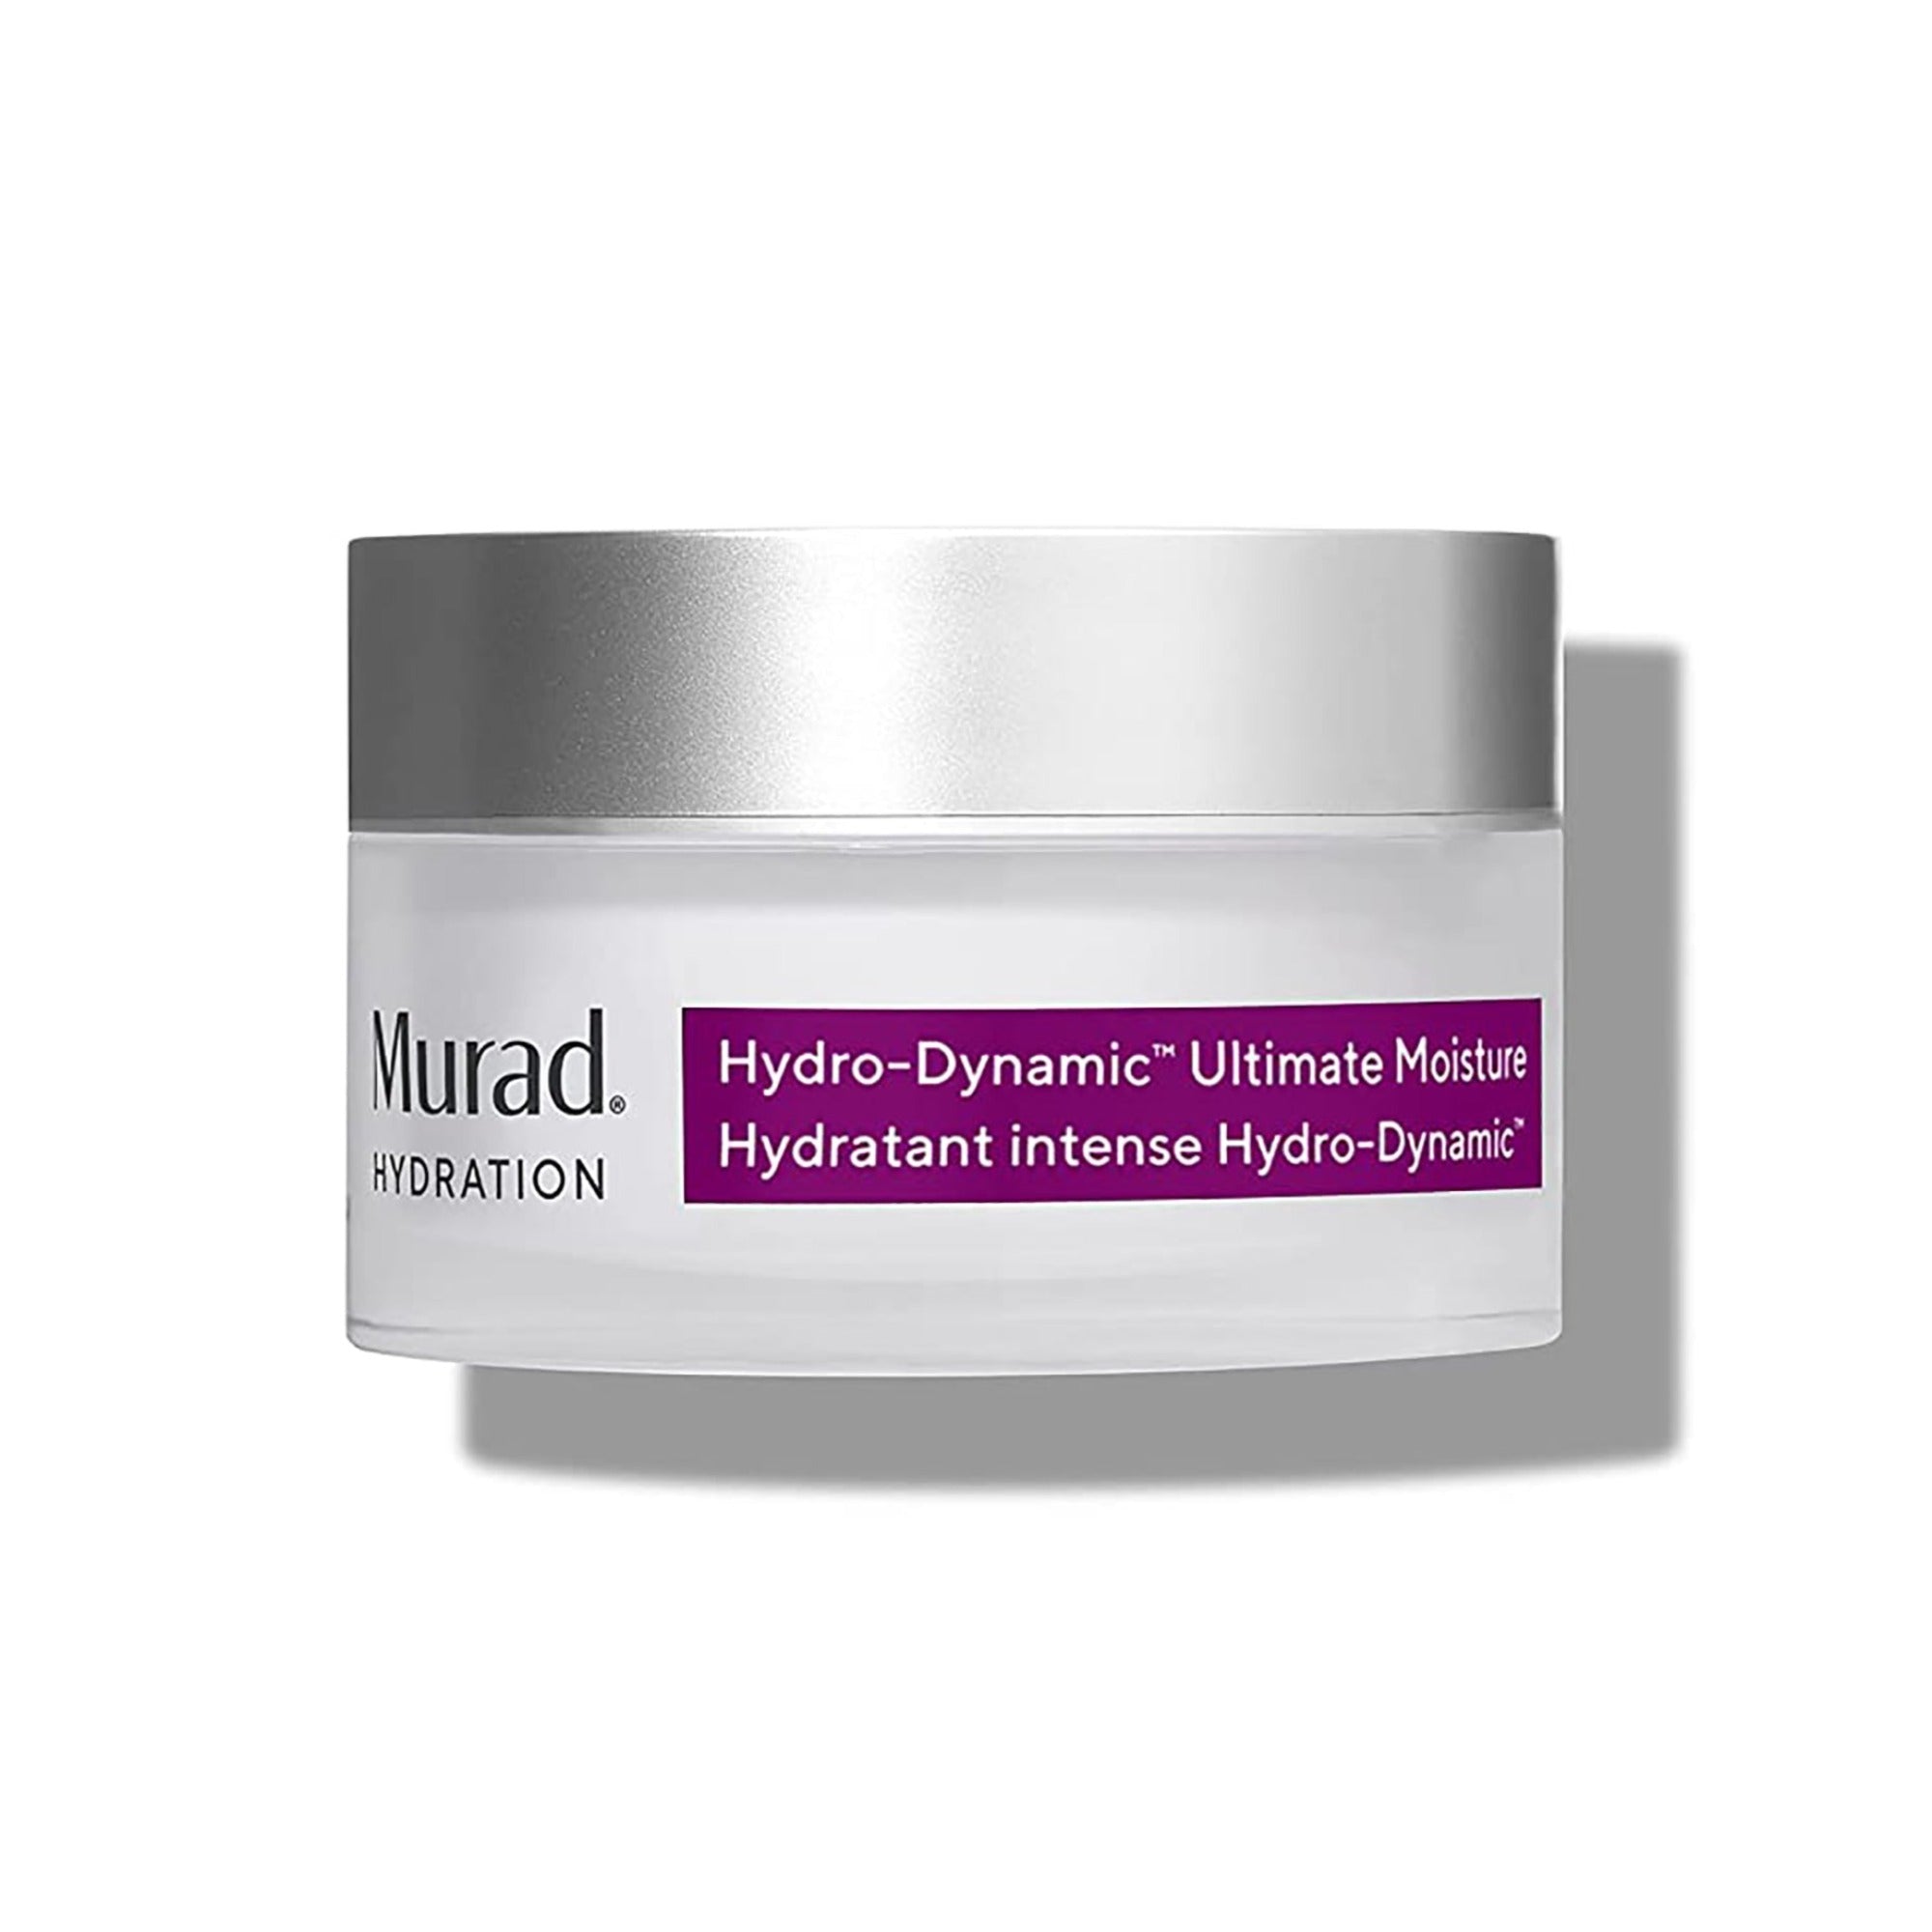 Murad Hydro-Dynamic Ultimate Moisture / 1.7OZ